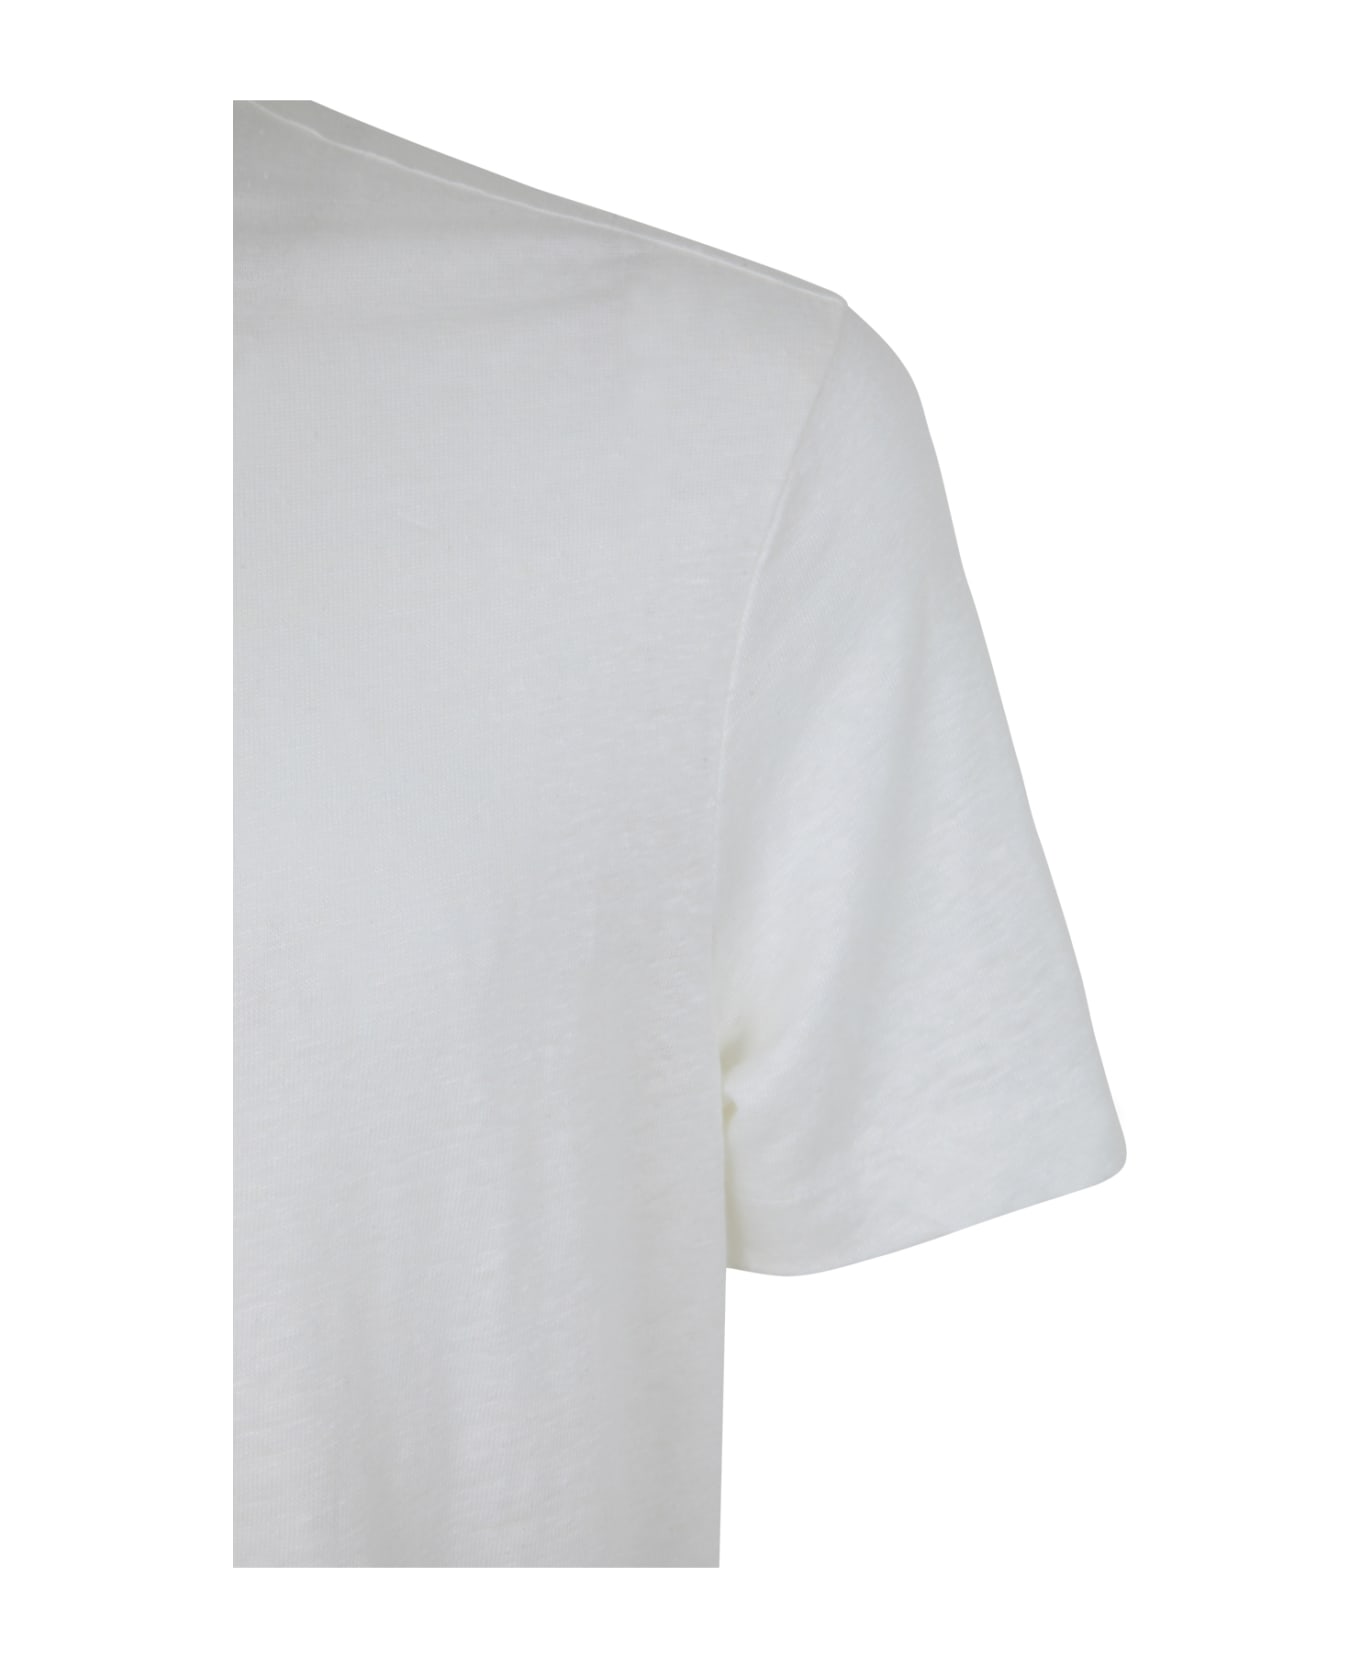 Majestic Filatures Short Sleeves Crew Neck T-shirt - White